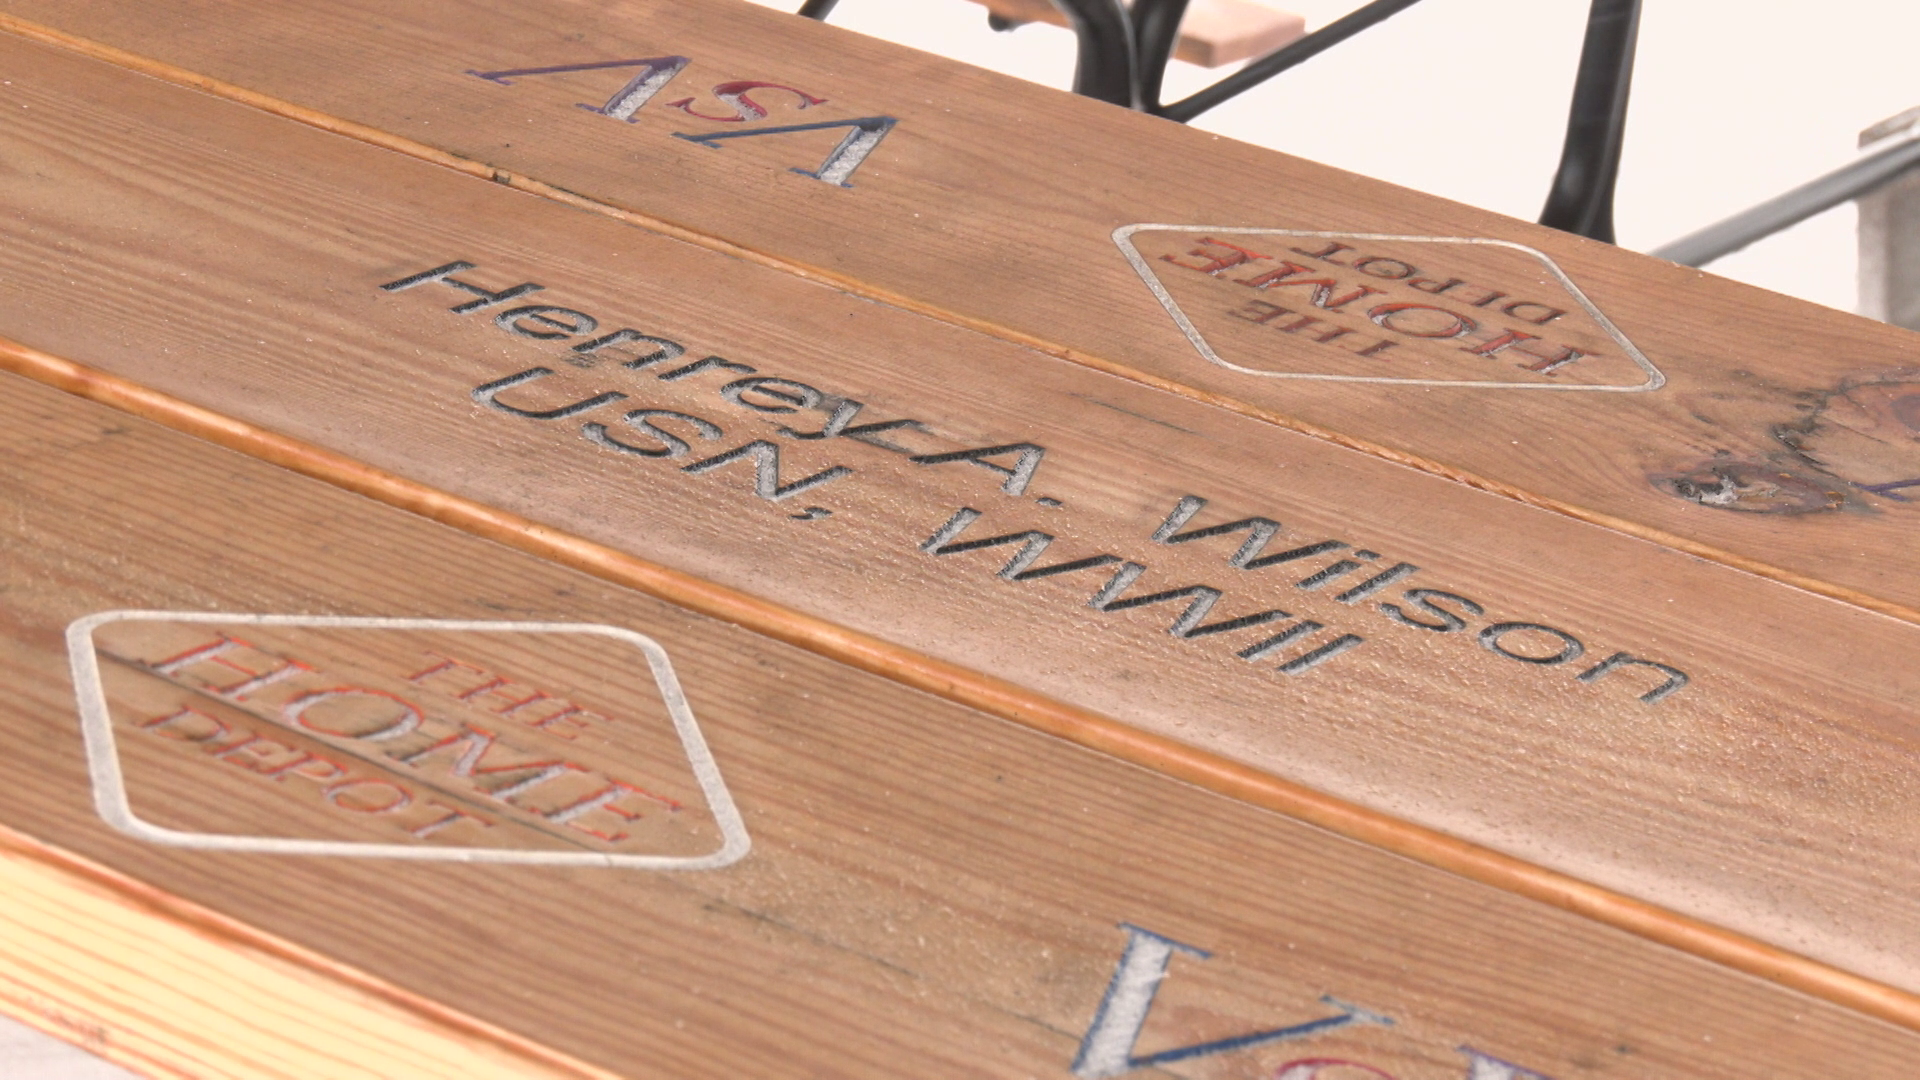 Community effort to build picnic tables memorializing veterans